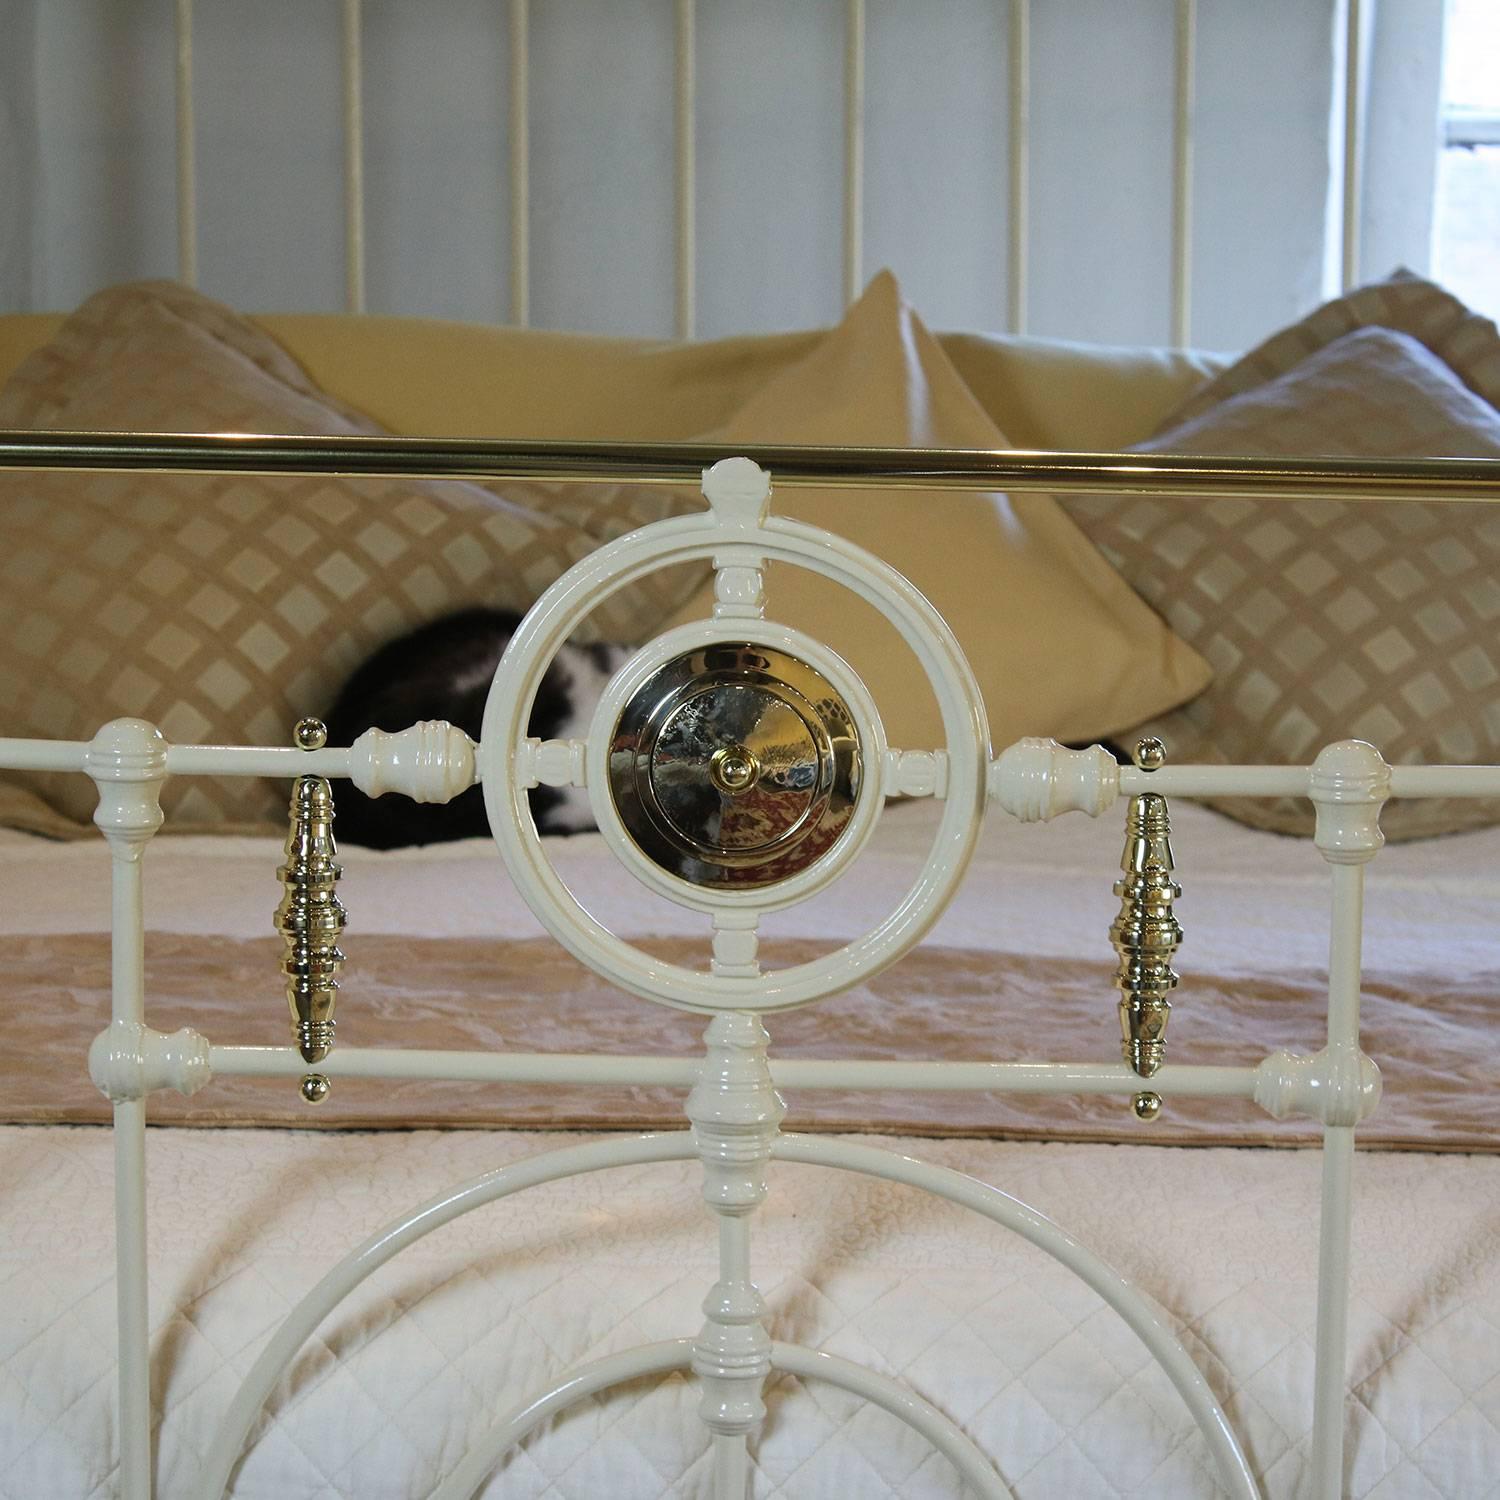 Victorian Decorative Cream Brass and Iron Bed, MK133